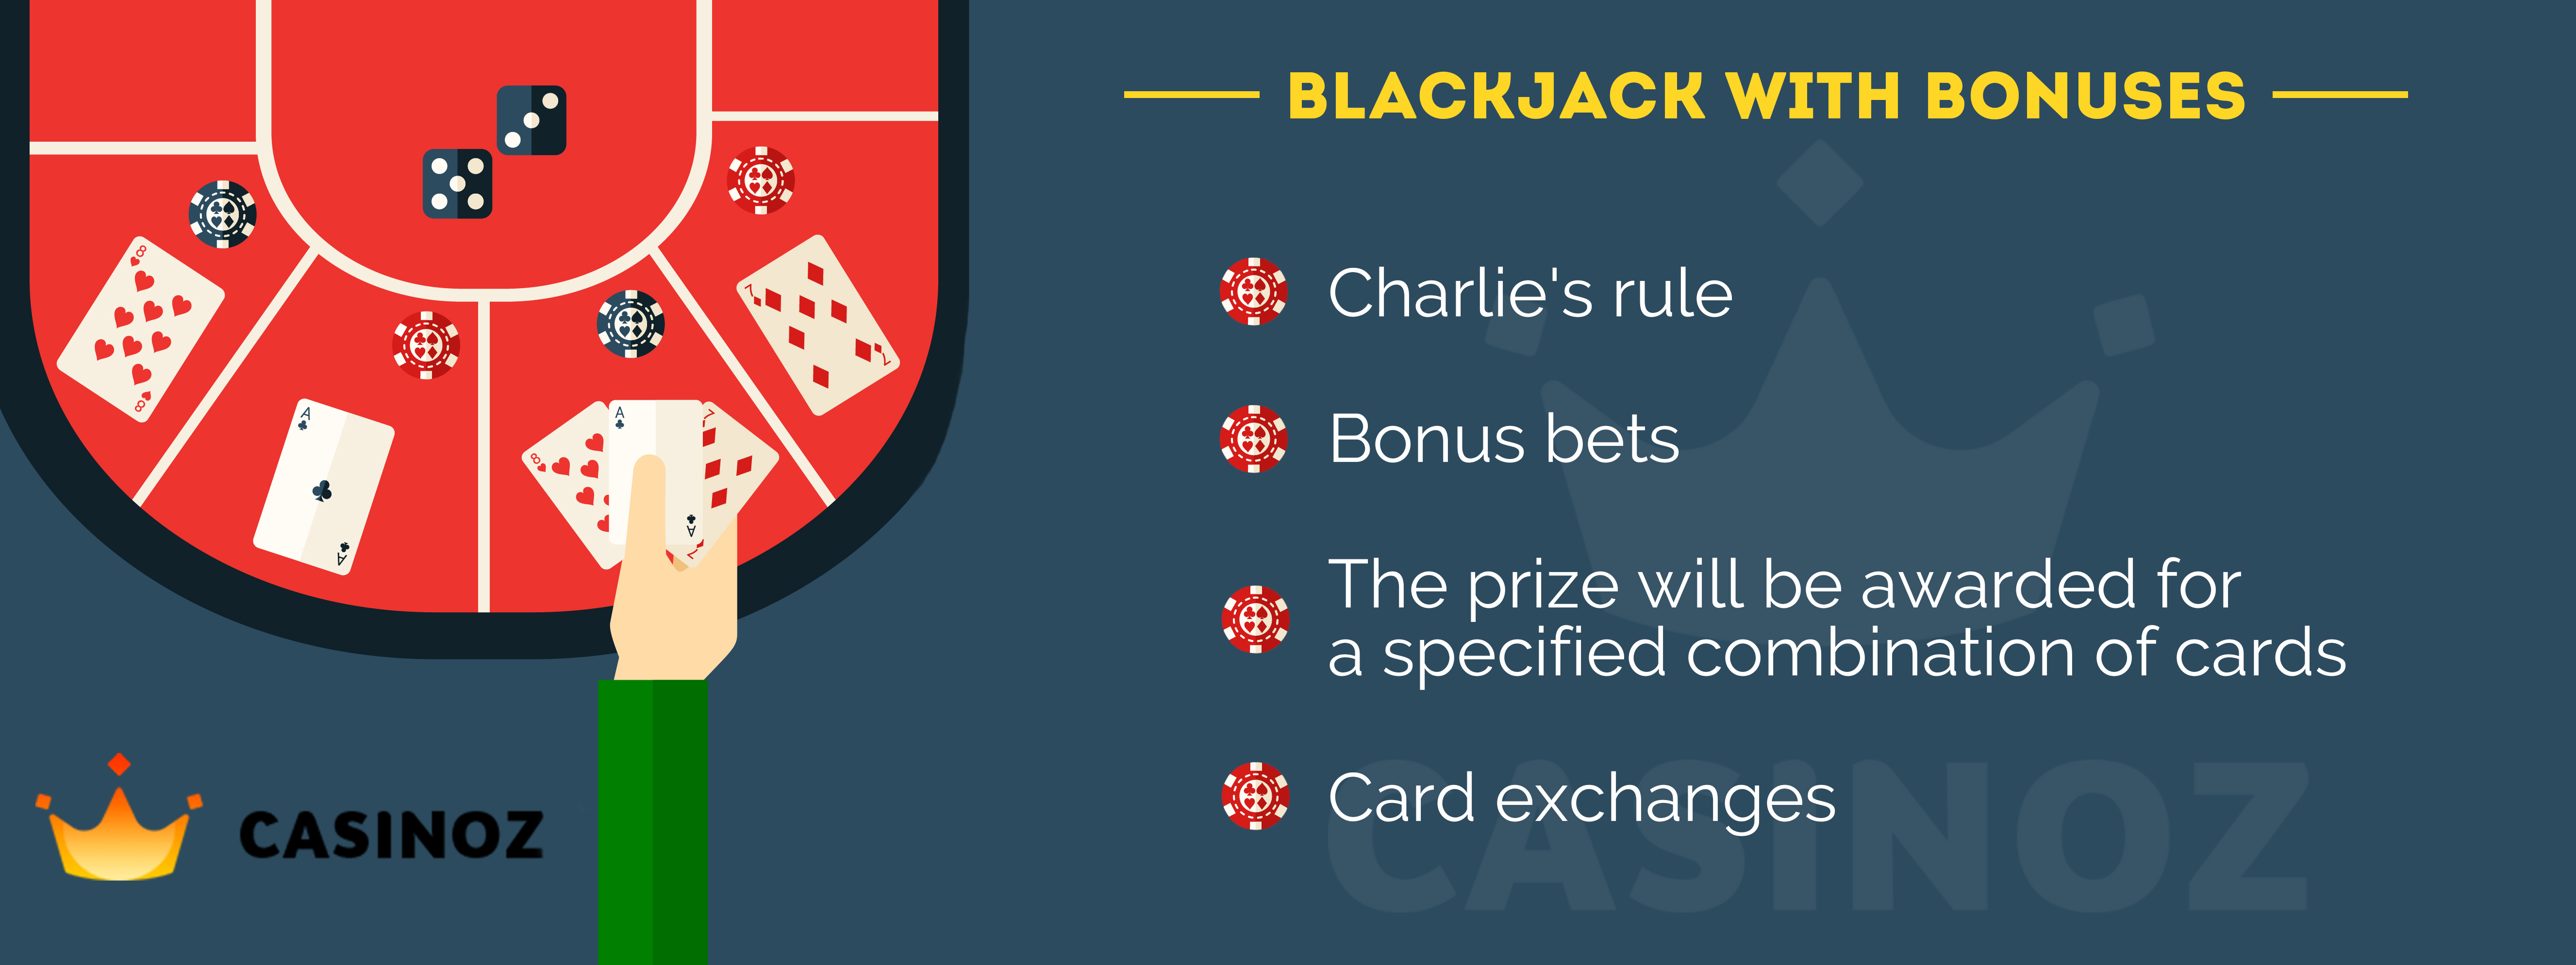 san manuel casino blackjack rules